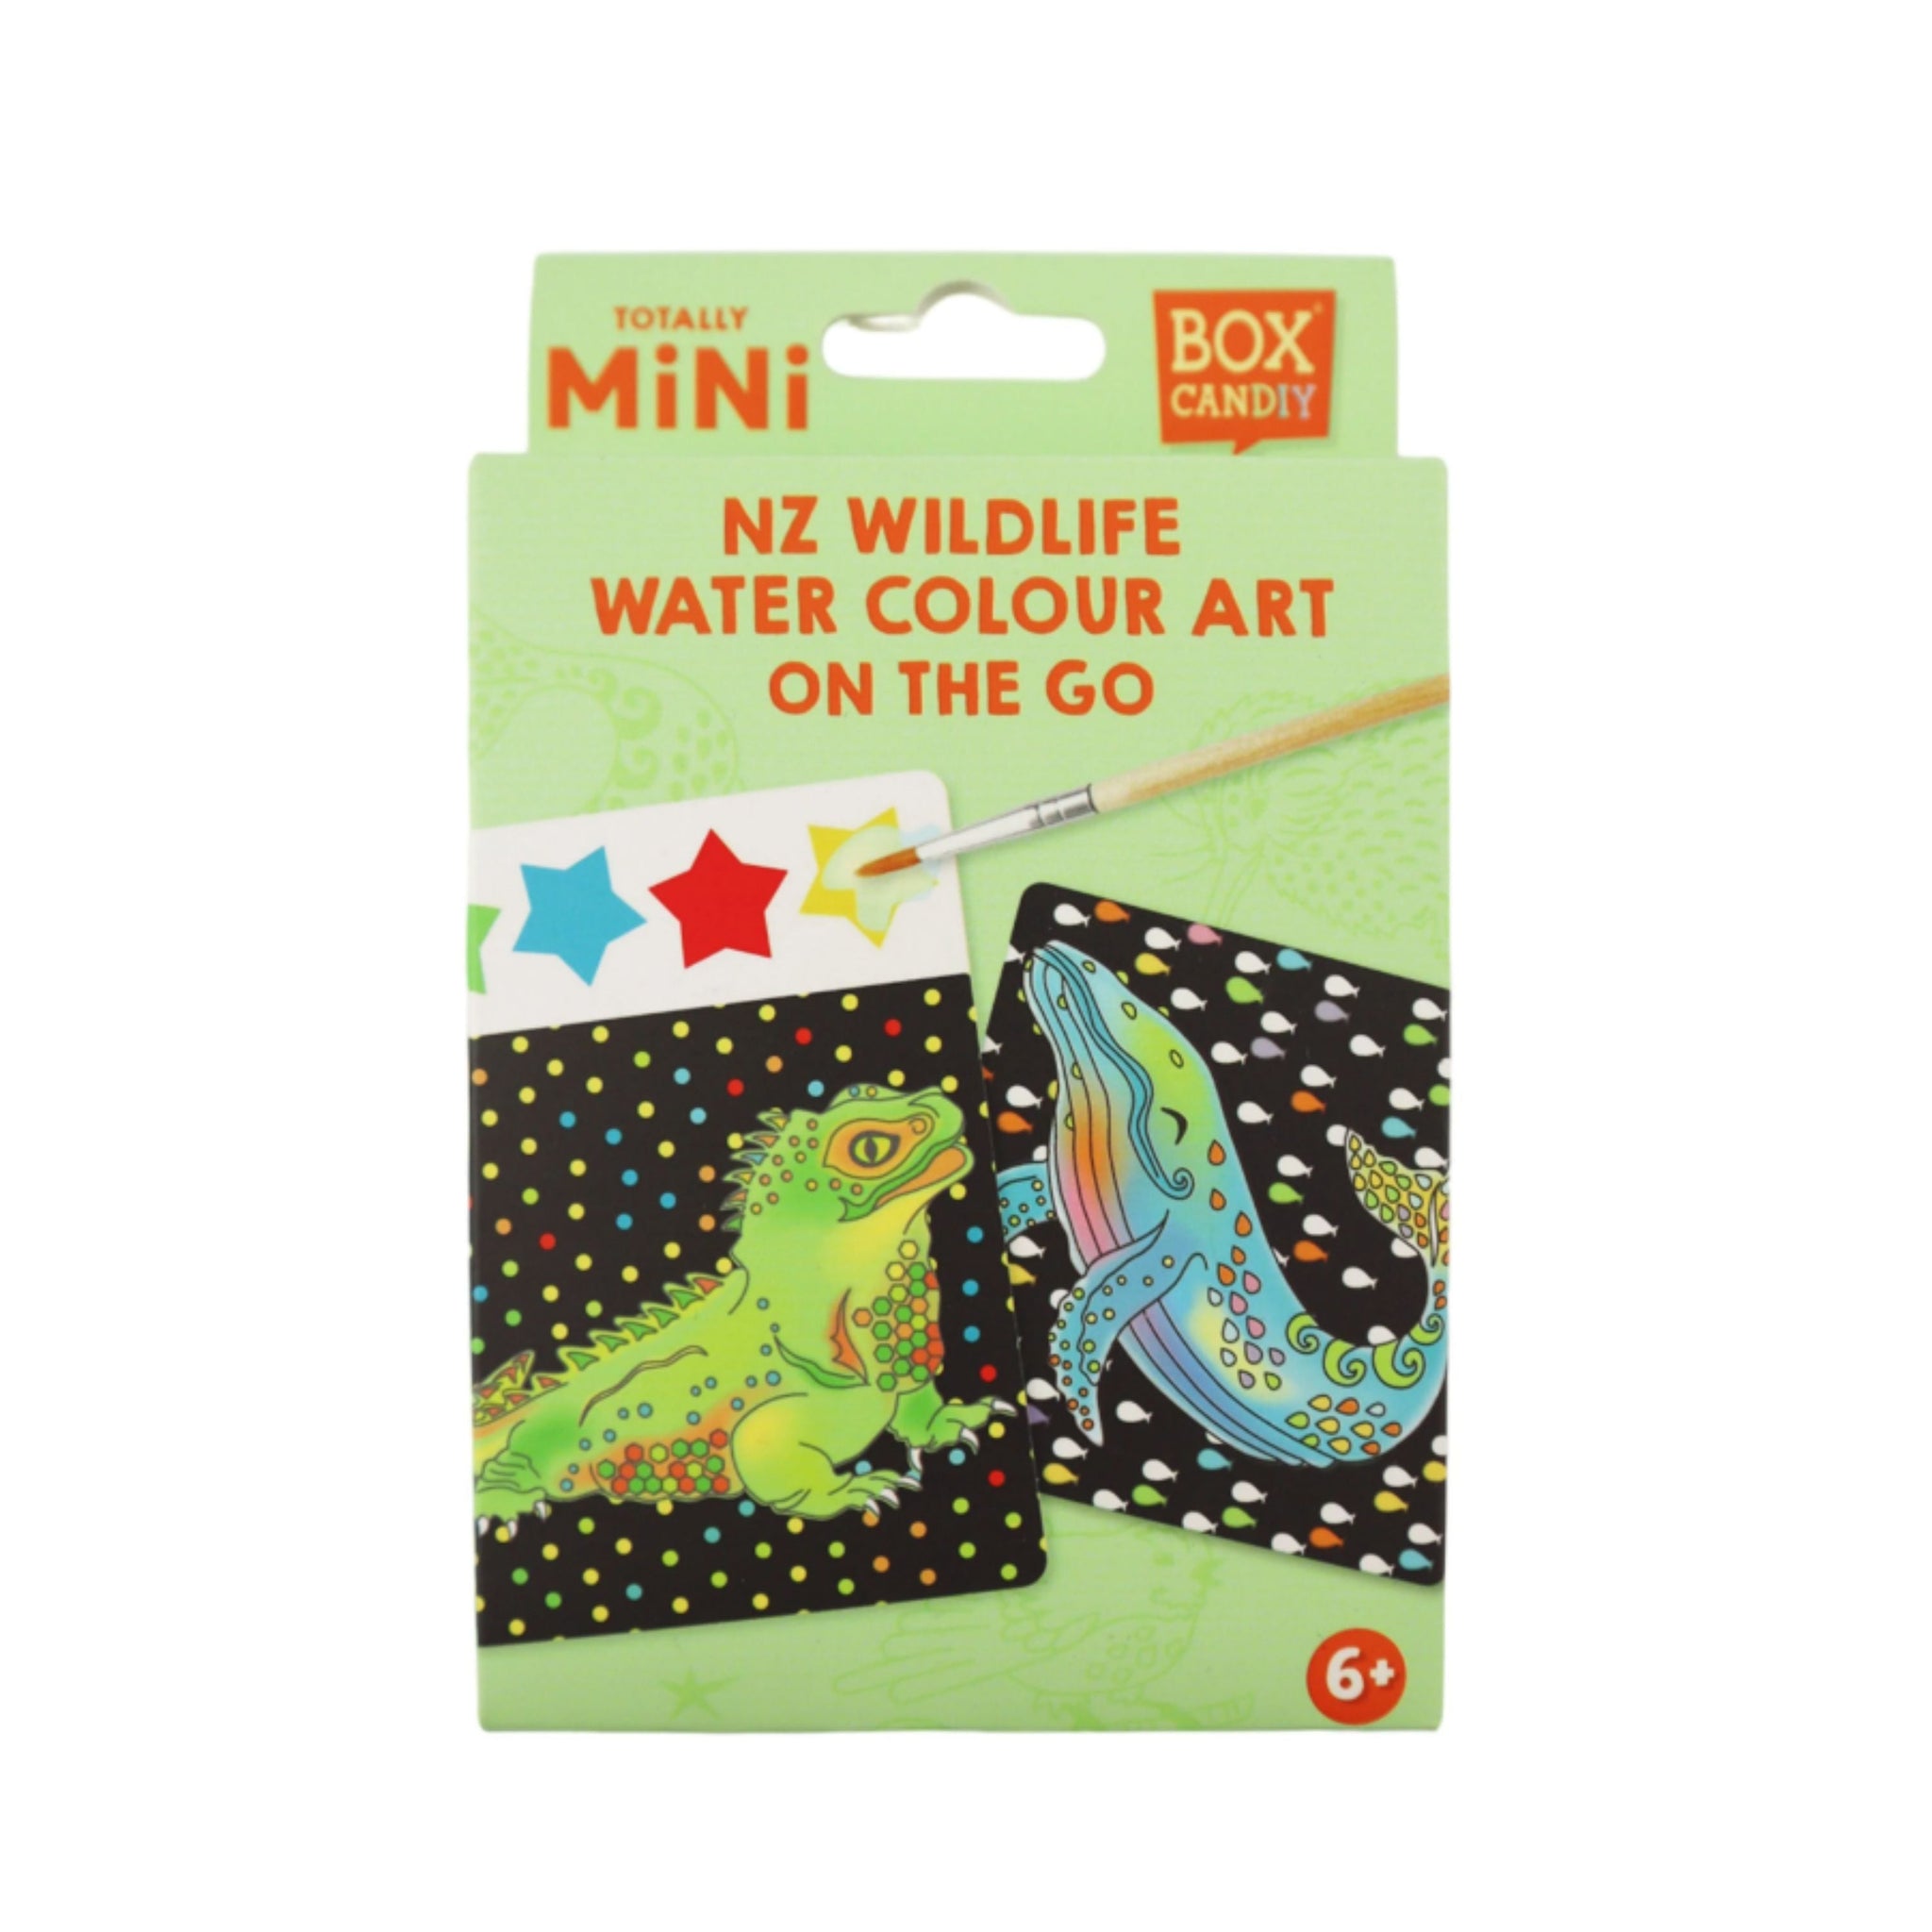 Totally Mini NZ Wildlife Water Colour Art